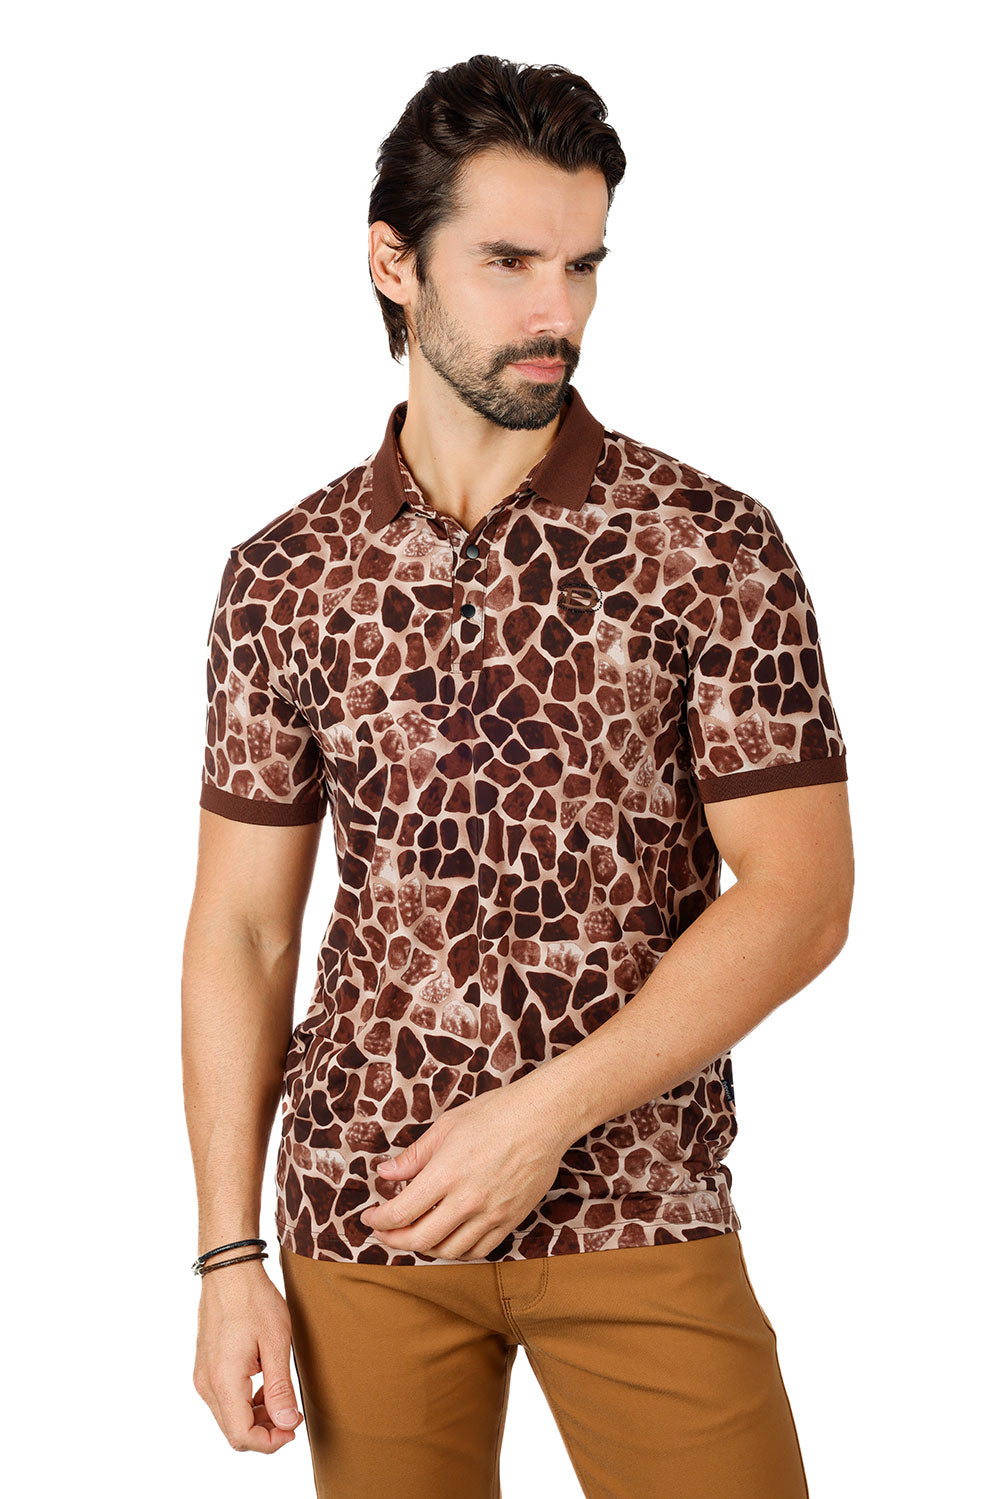 Barabas Men's Rocks Geometric Short Sleeve Polo Shirts 3PS130  Brown